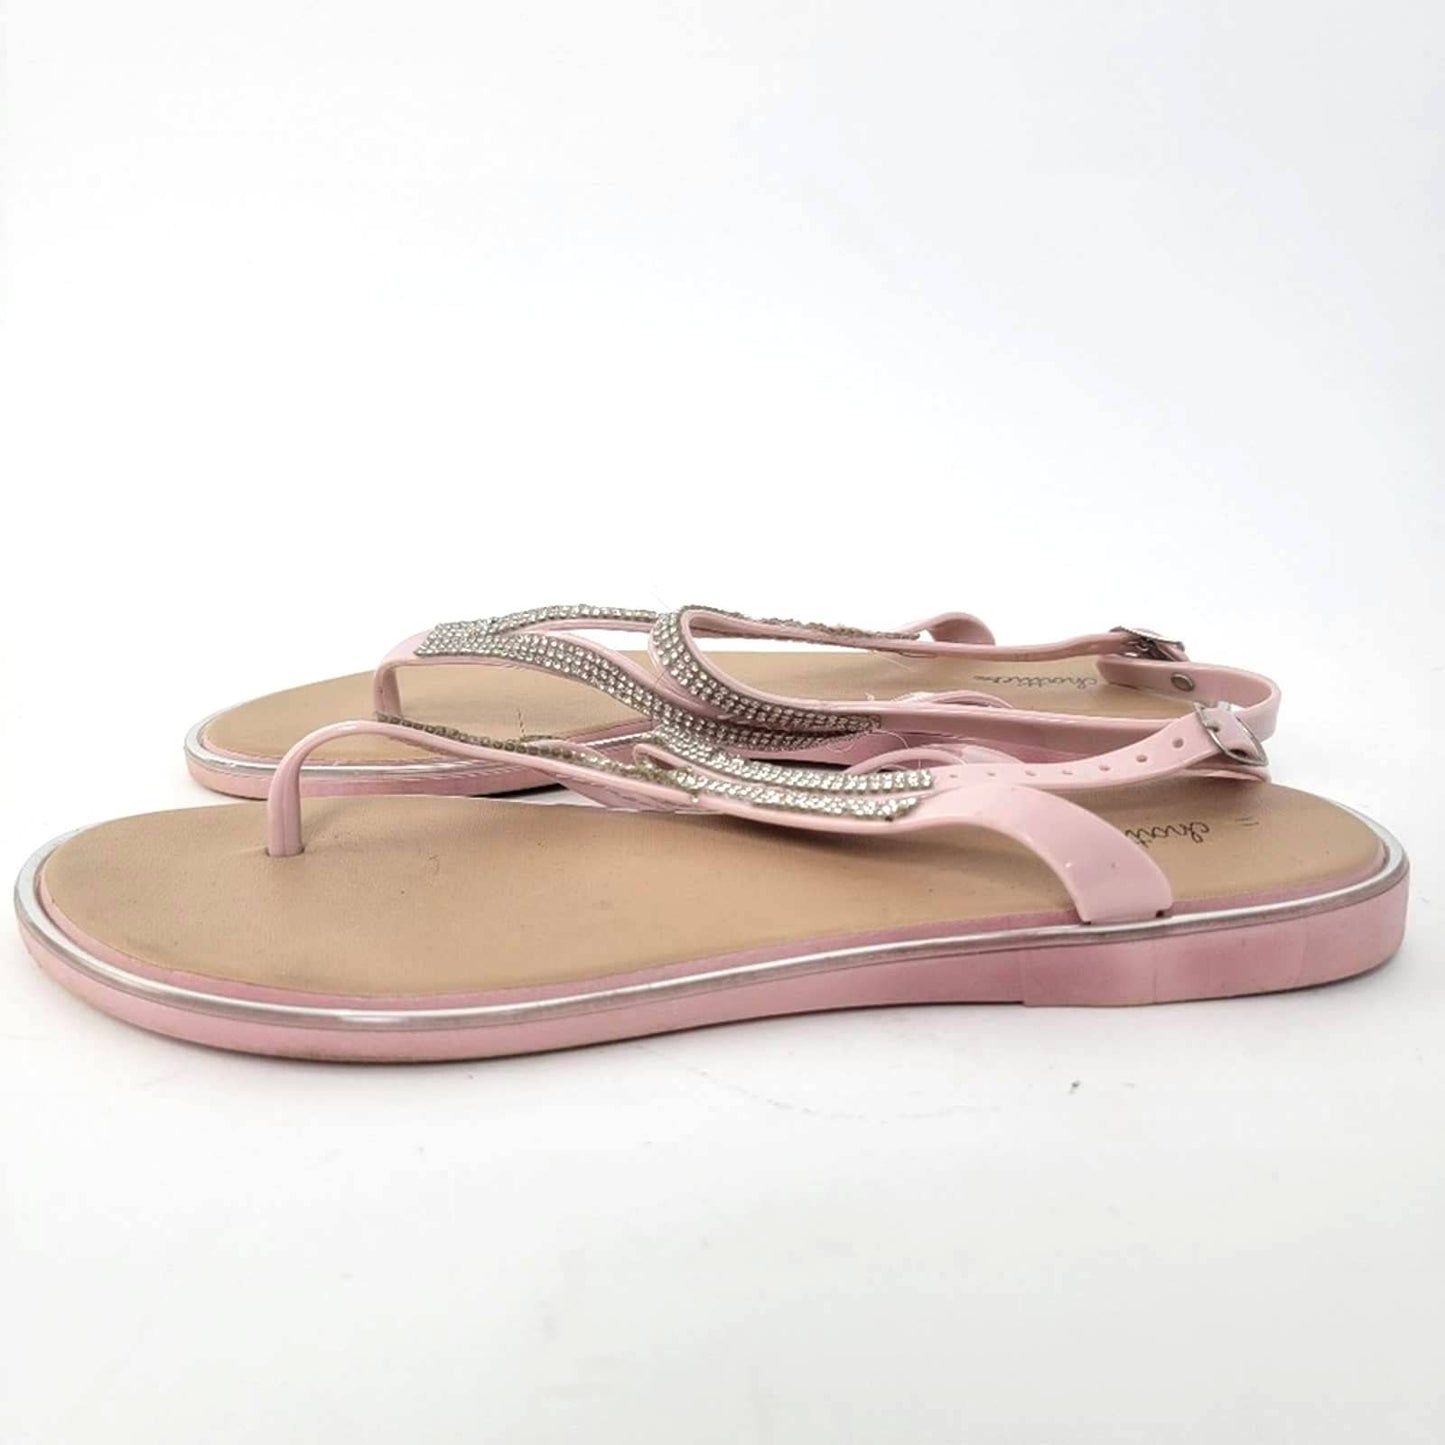 Chatties Pink Rhinestone Thong Flip Flop Sandals - 9.5/10